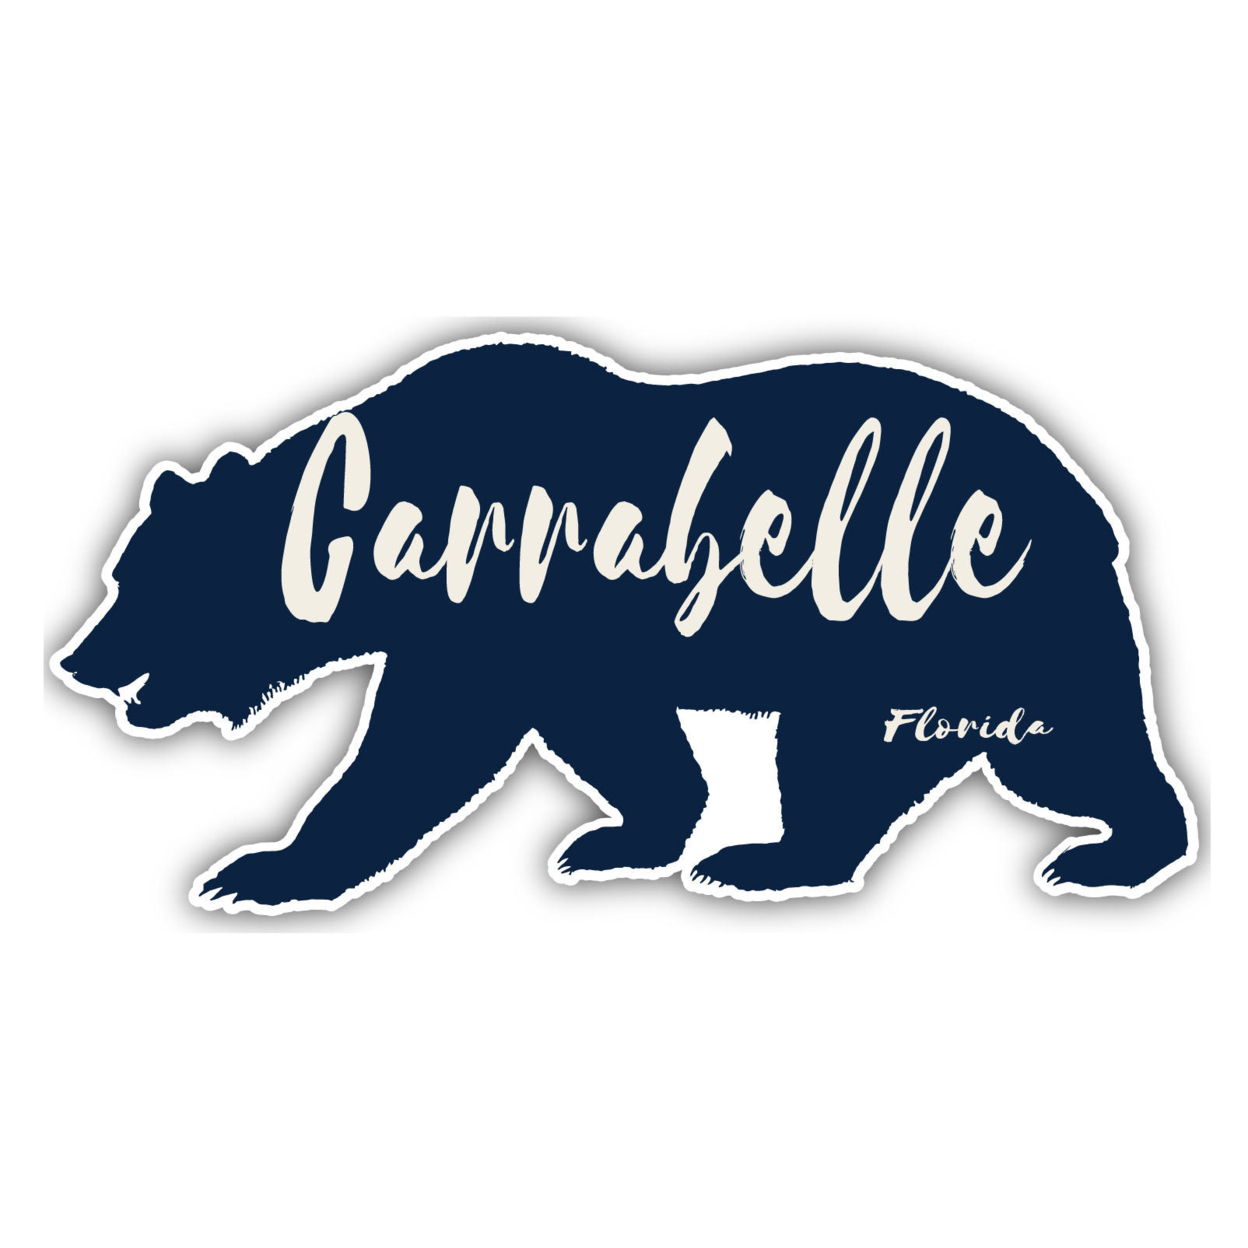 Carrabelle Florida Souvenir Decorative Stickers (Choose Theme And Size) - Single Unit, 10-Inch, Bear